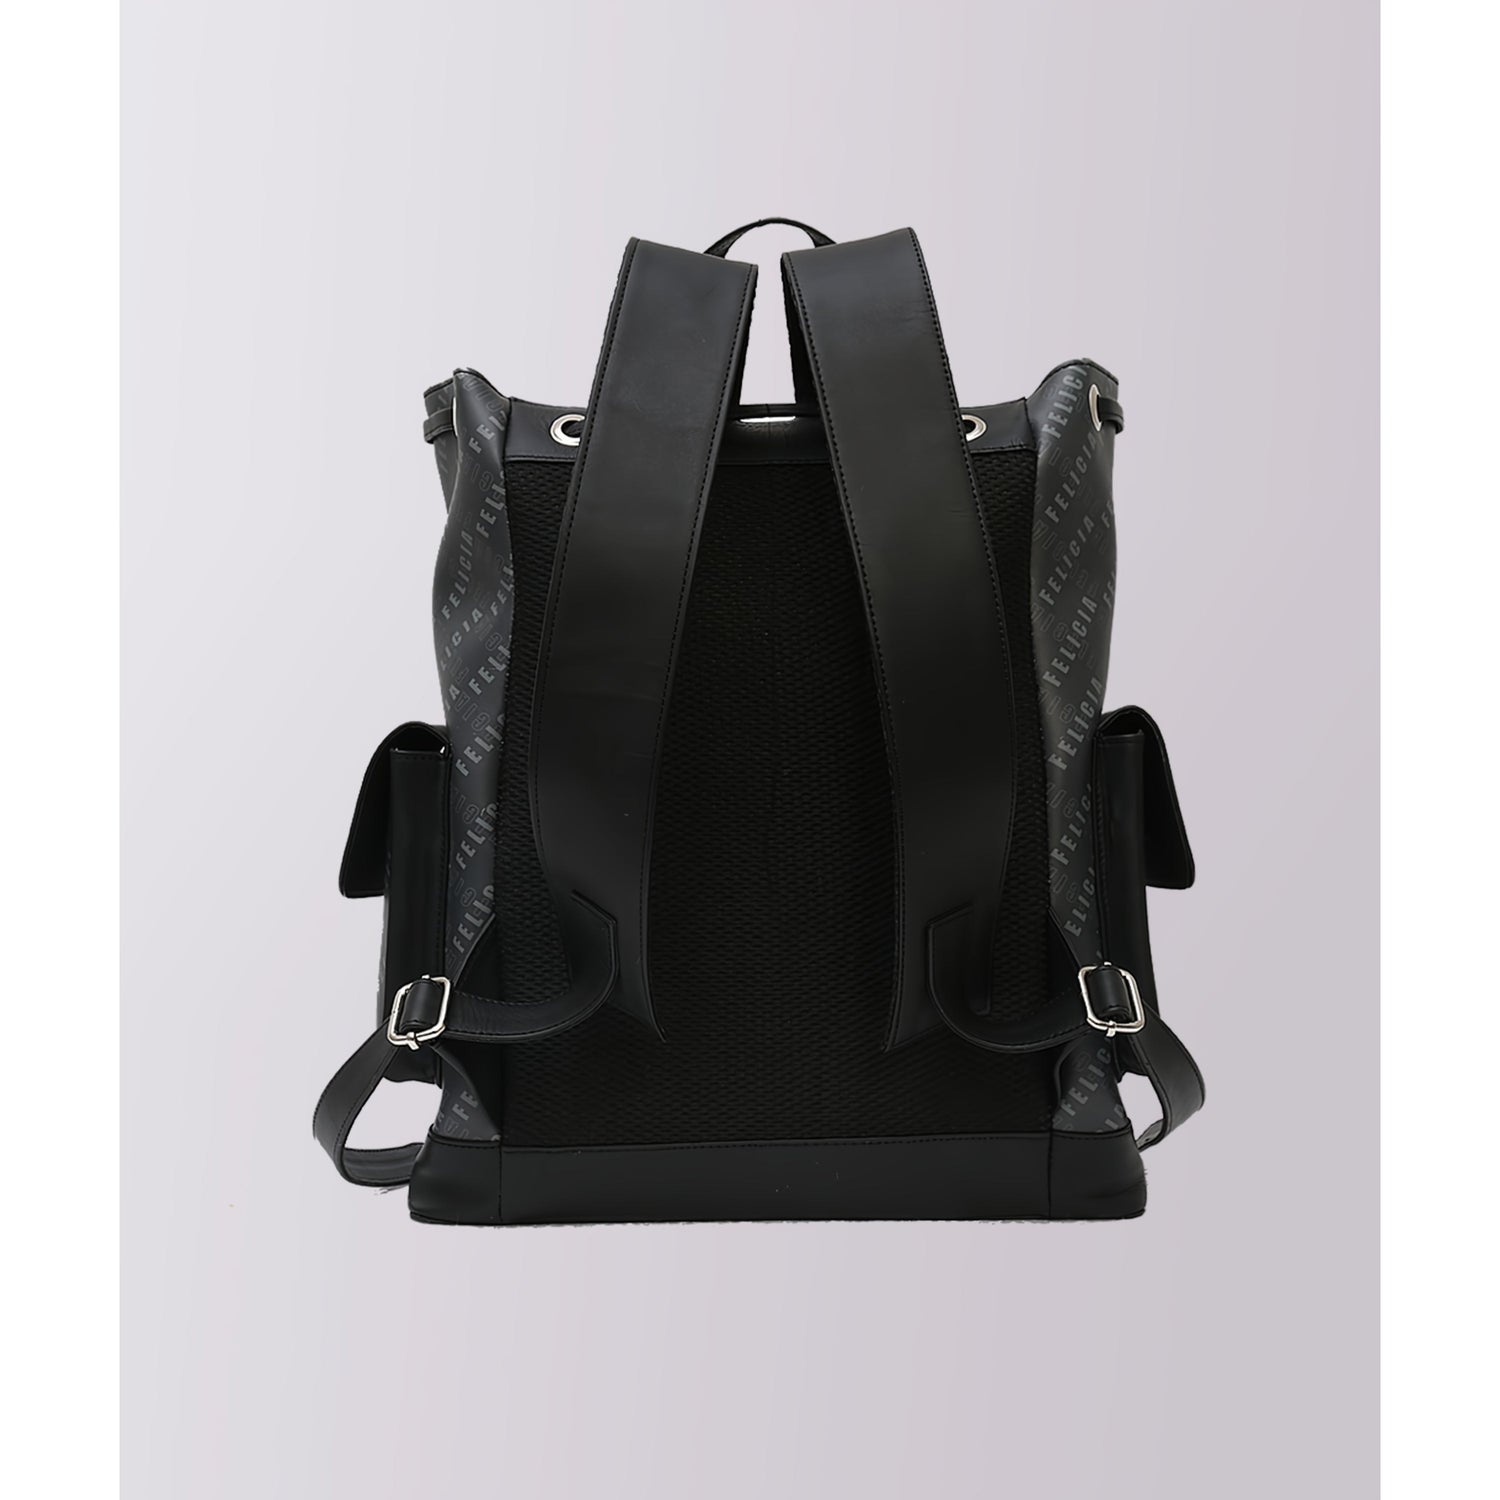 Felicia Interlocking Black Bag Pack 3